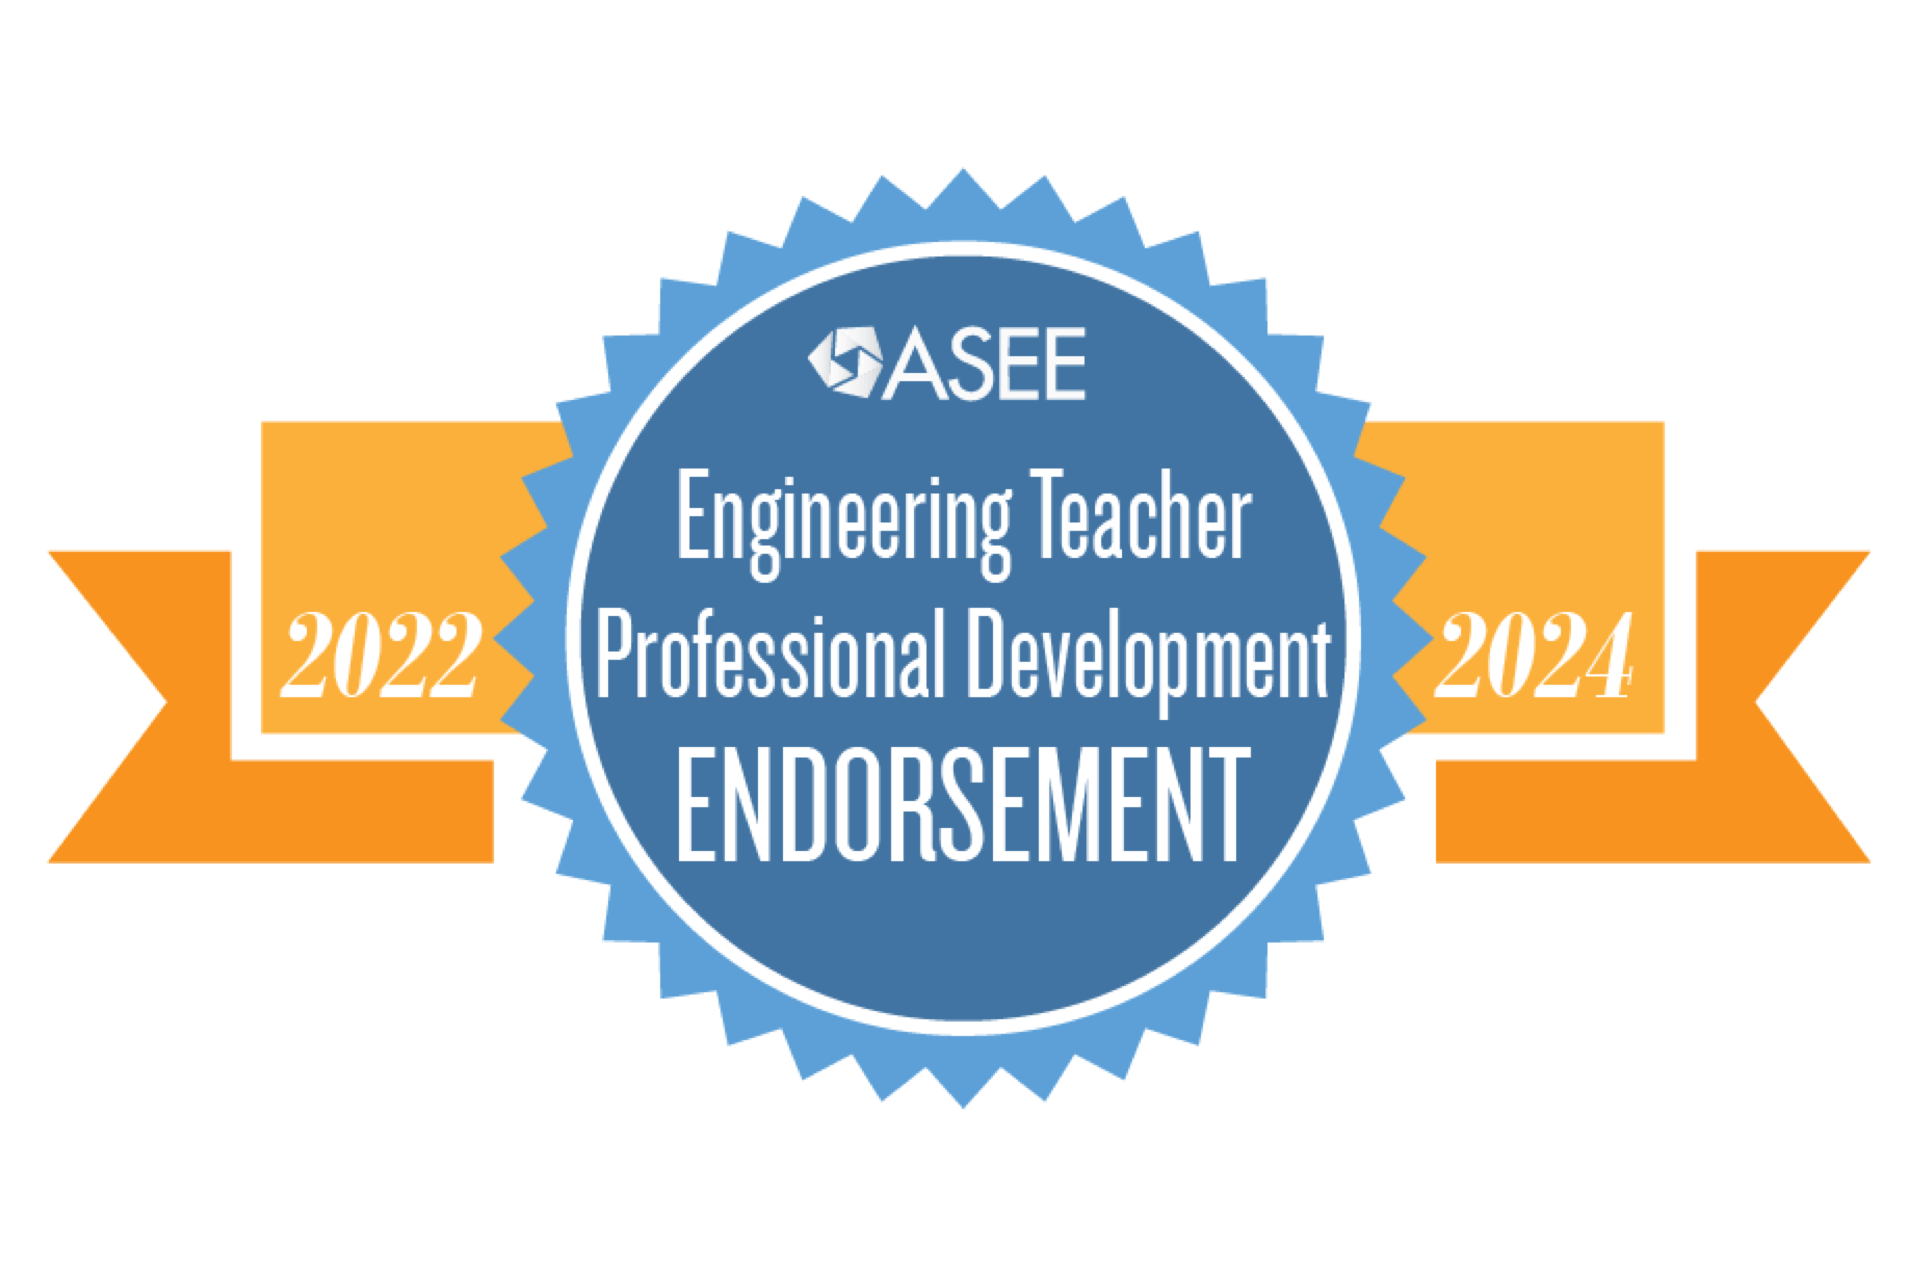 ASEE Engineering Teacher Professional Development Endorsement badge